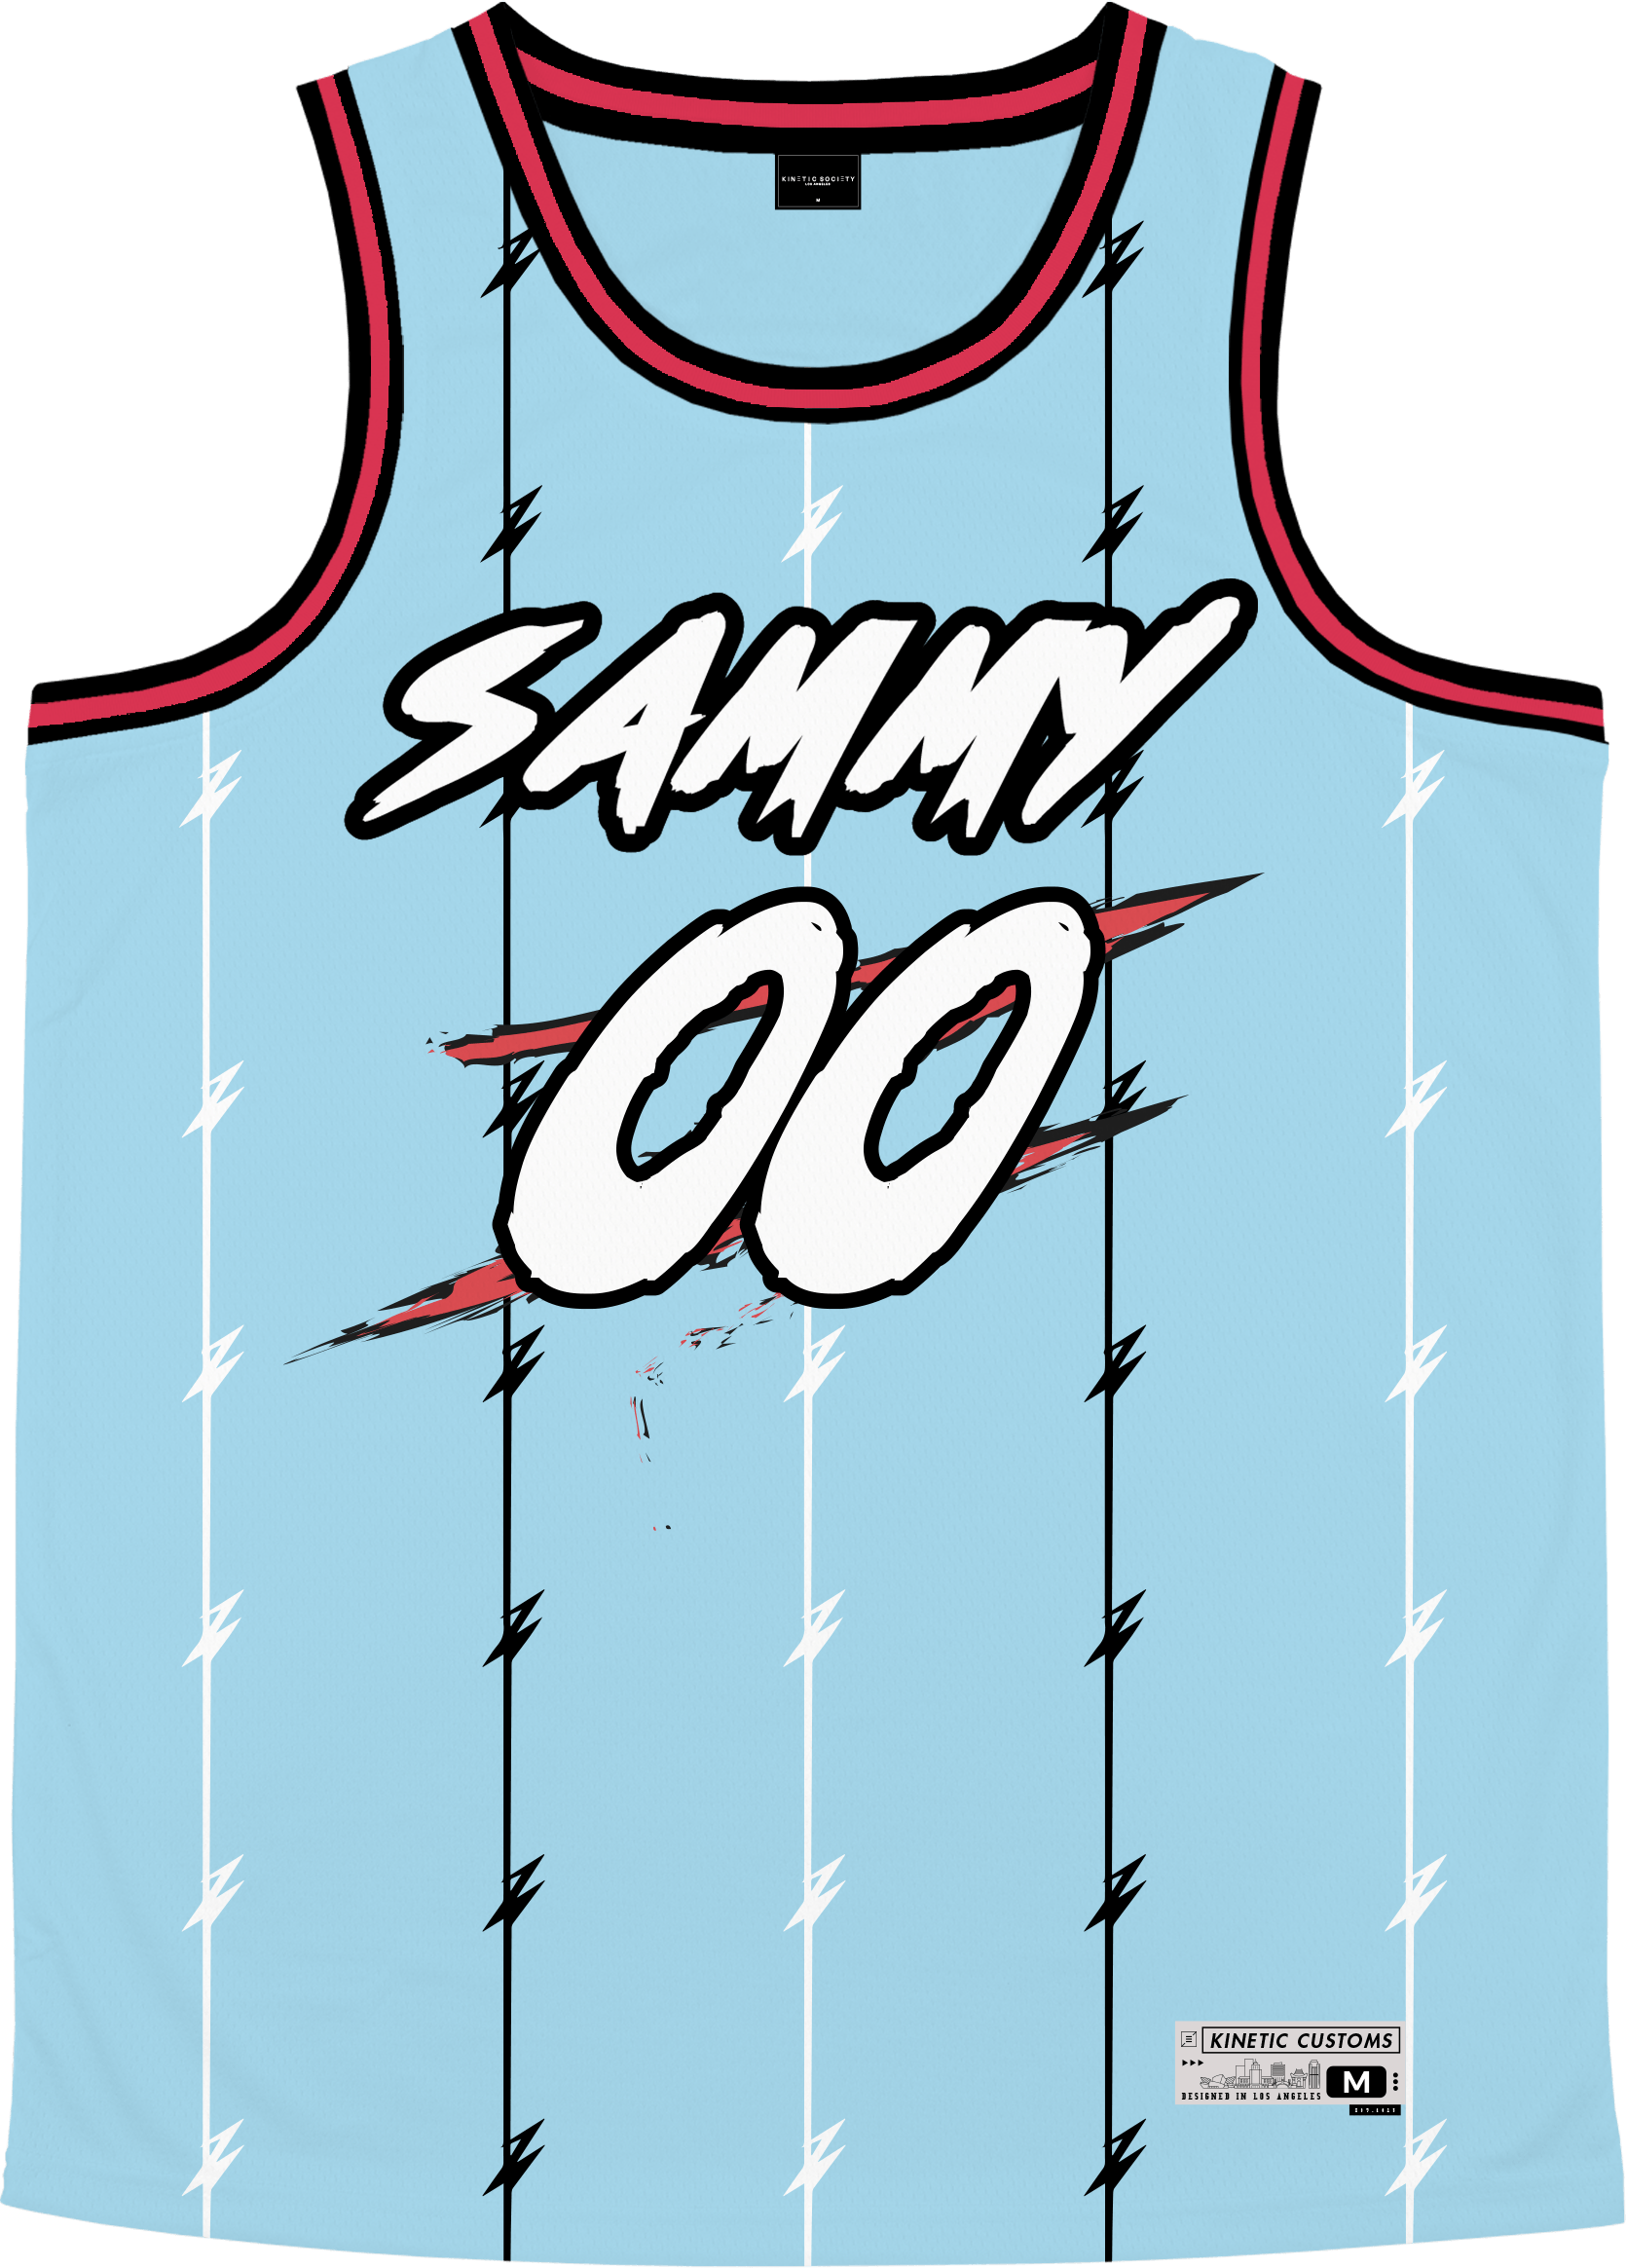 Kinetic Society LLC Sigma Alpha MU - Retro Ballers Basketball Jersey